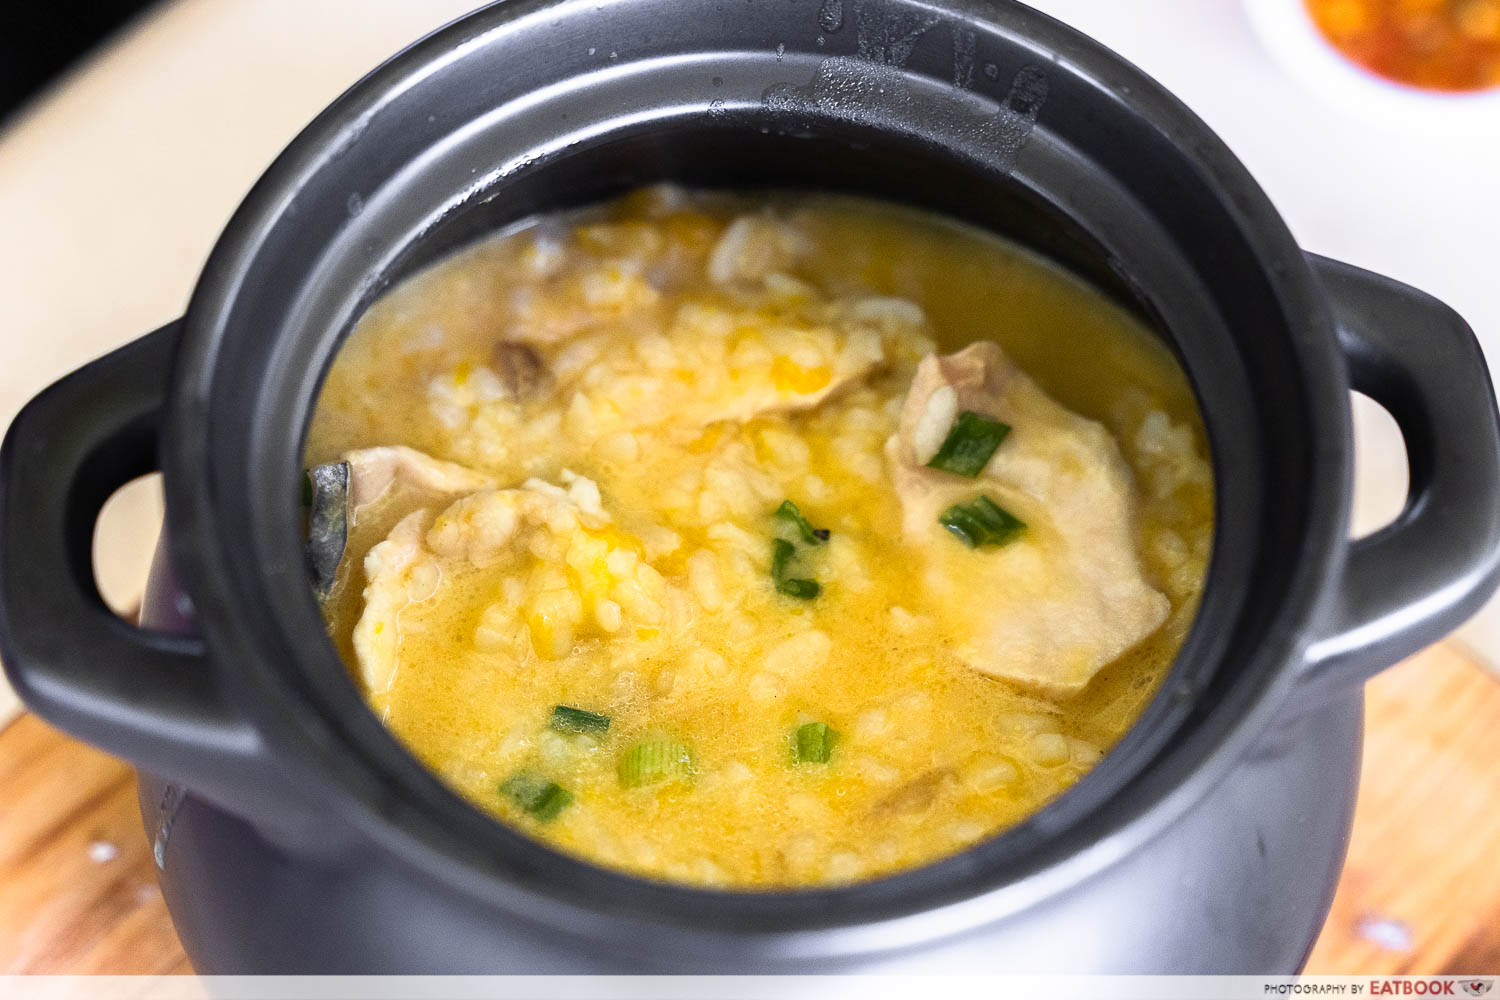 teochew fish soup - intro shot